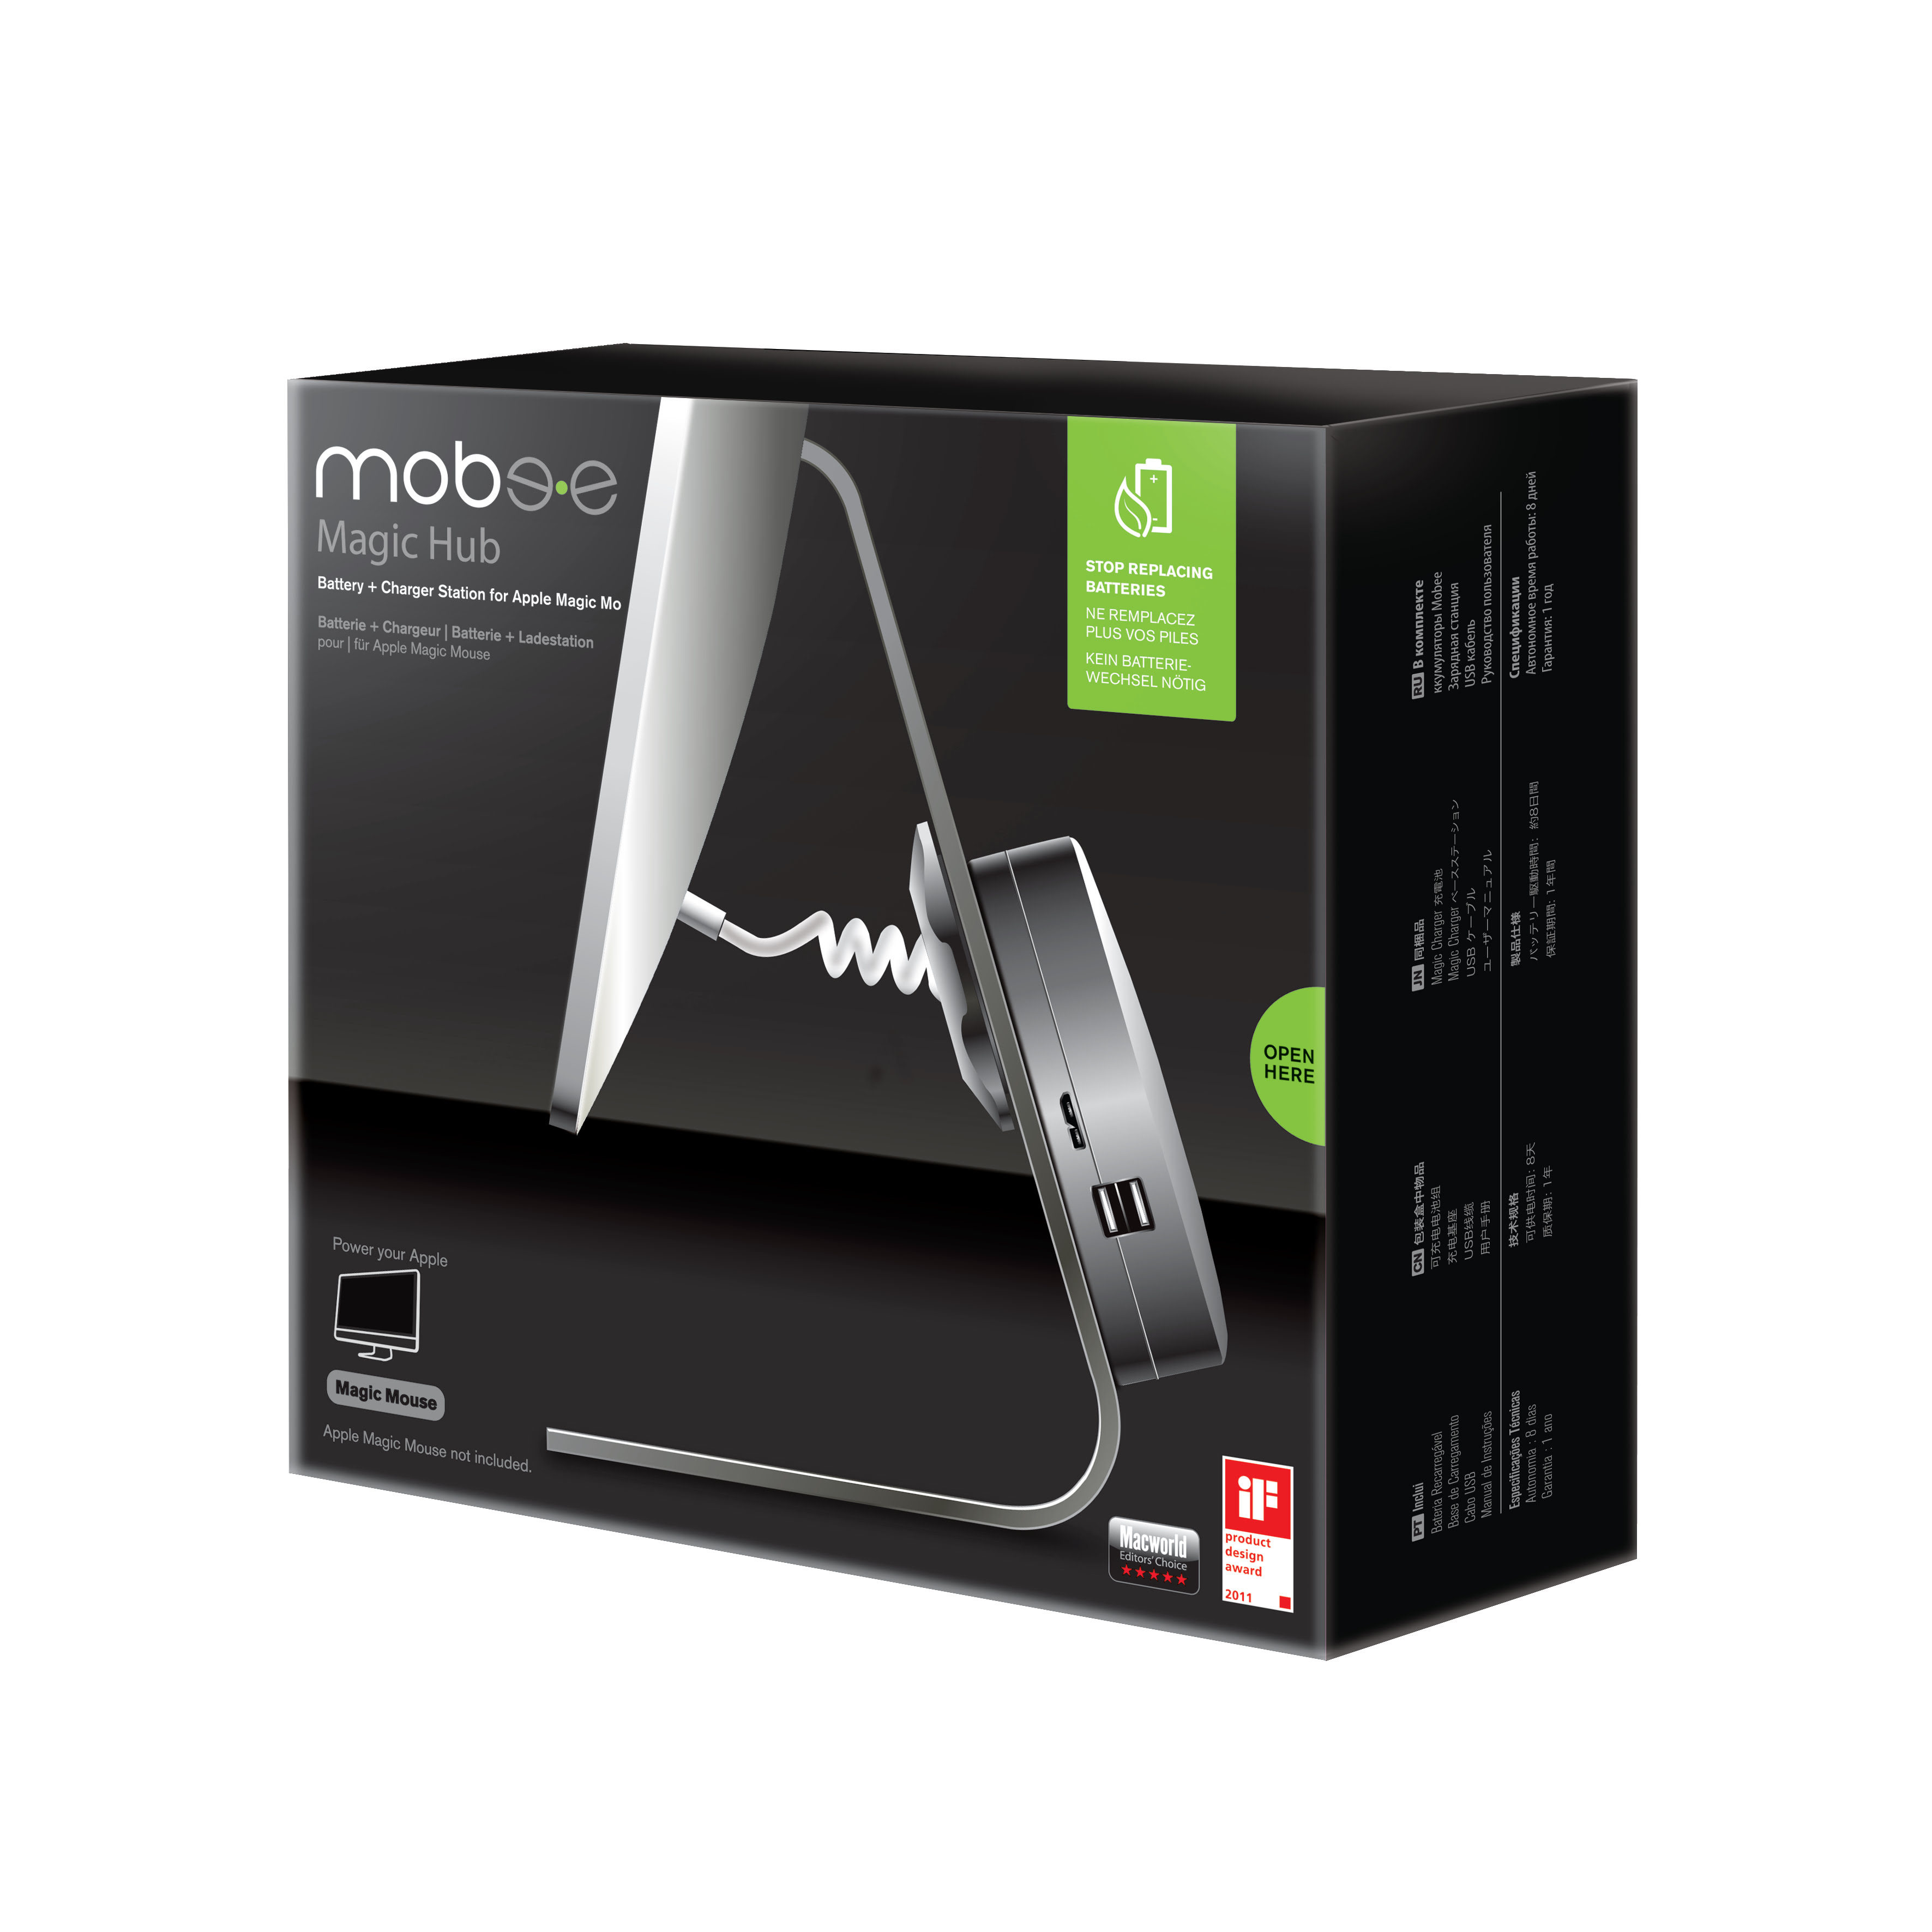 mobee Magic Hub: Mehr USB-Ports für den iMac